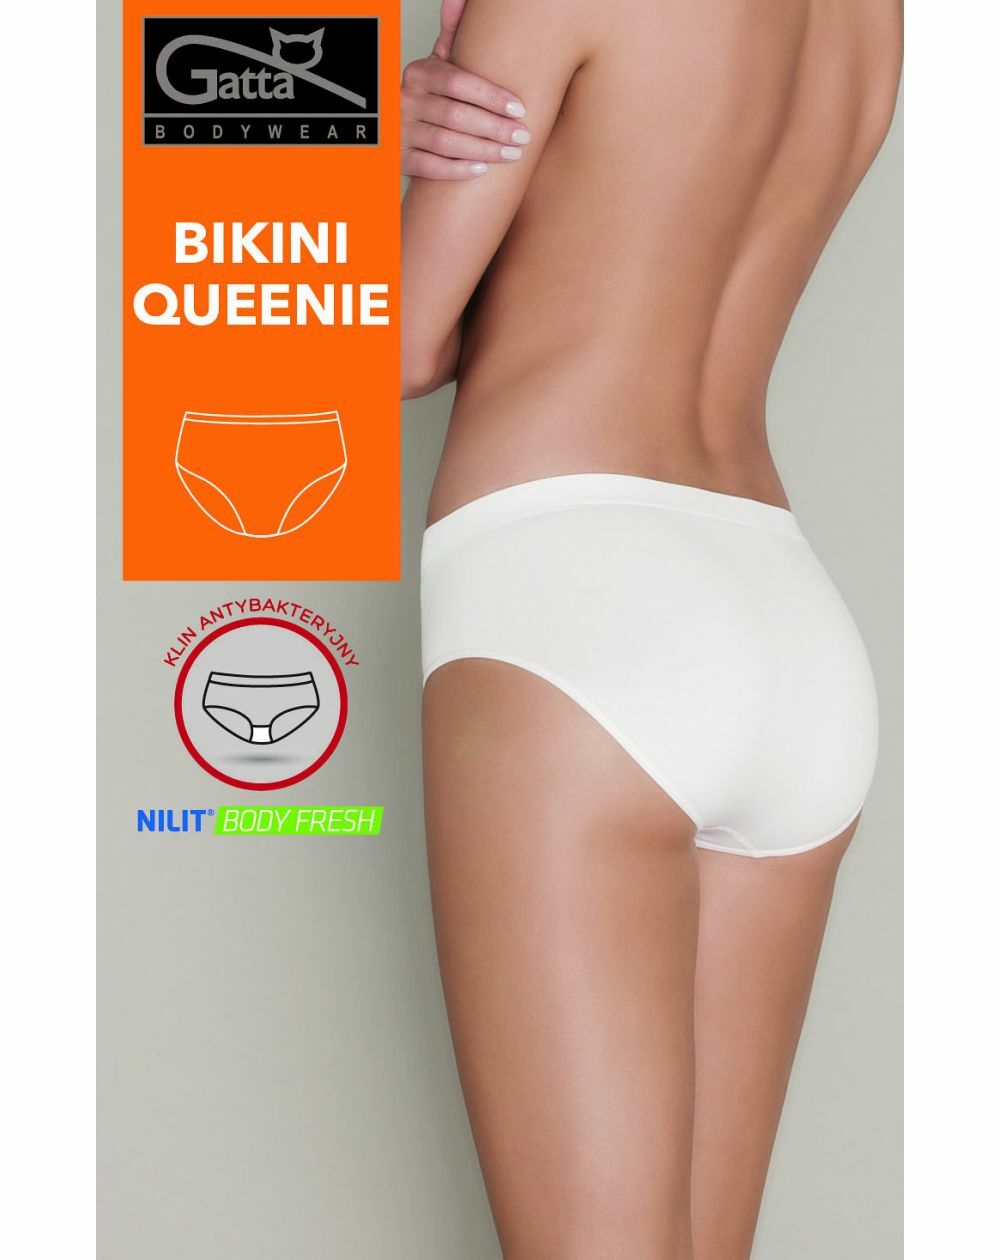 Gatta Bikini Queenie Briefs